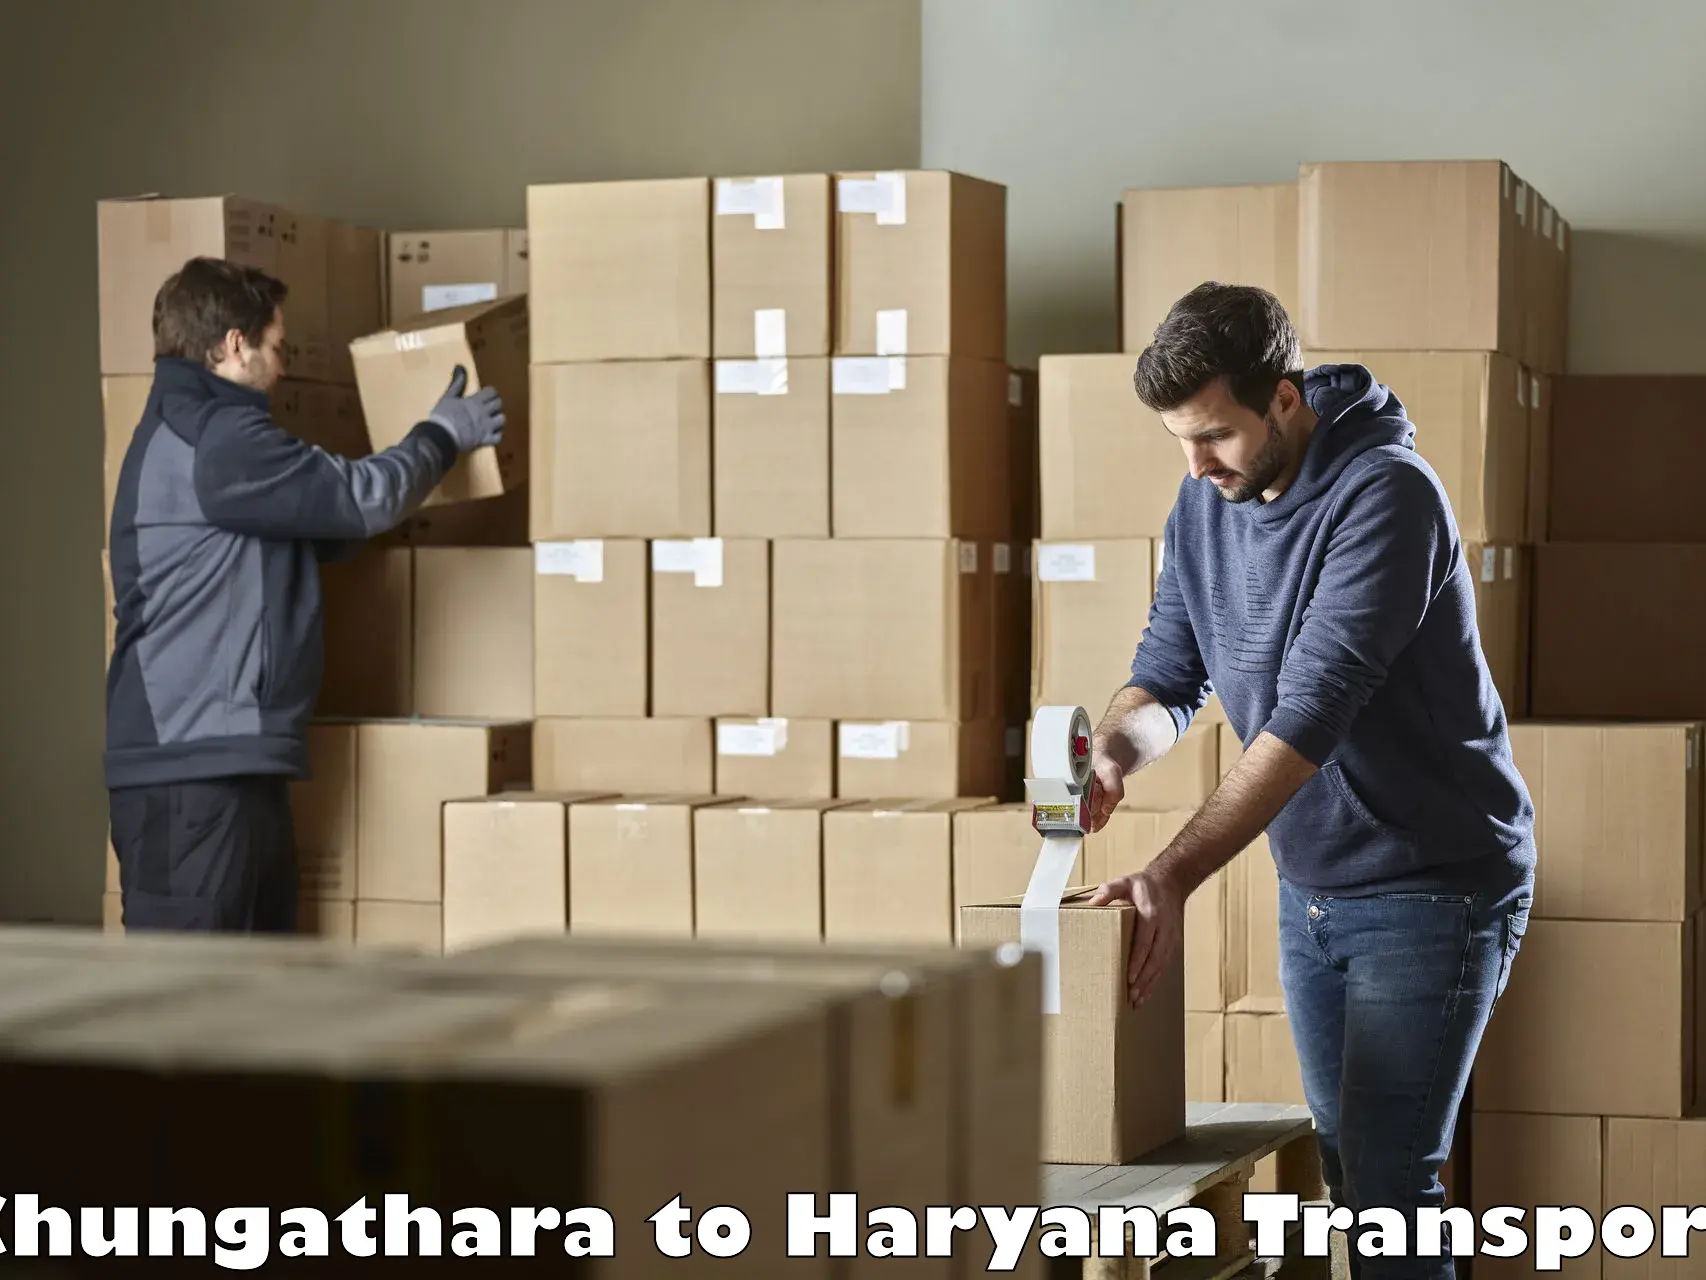 Furniture transport service Chungathara to Bhiwani